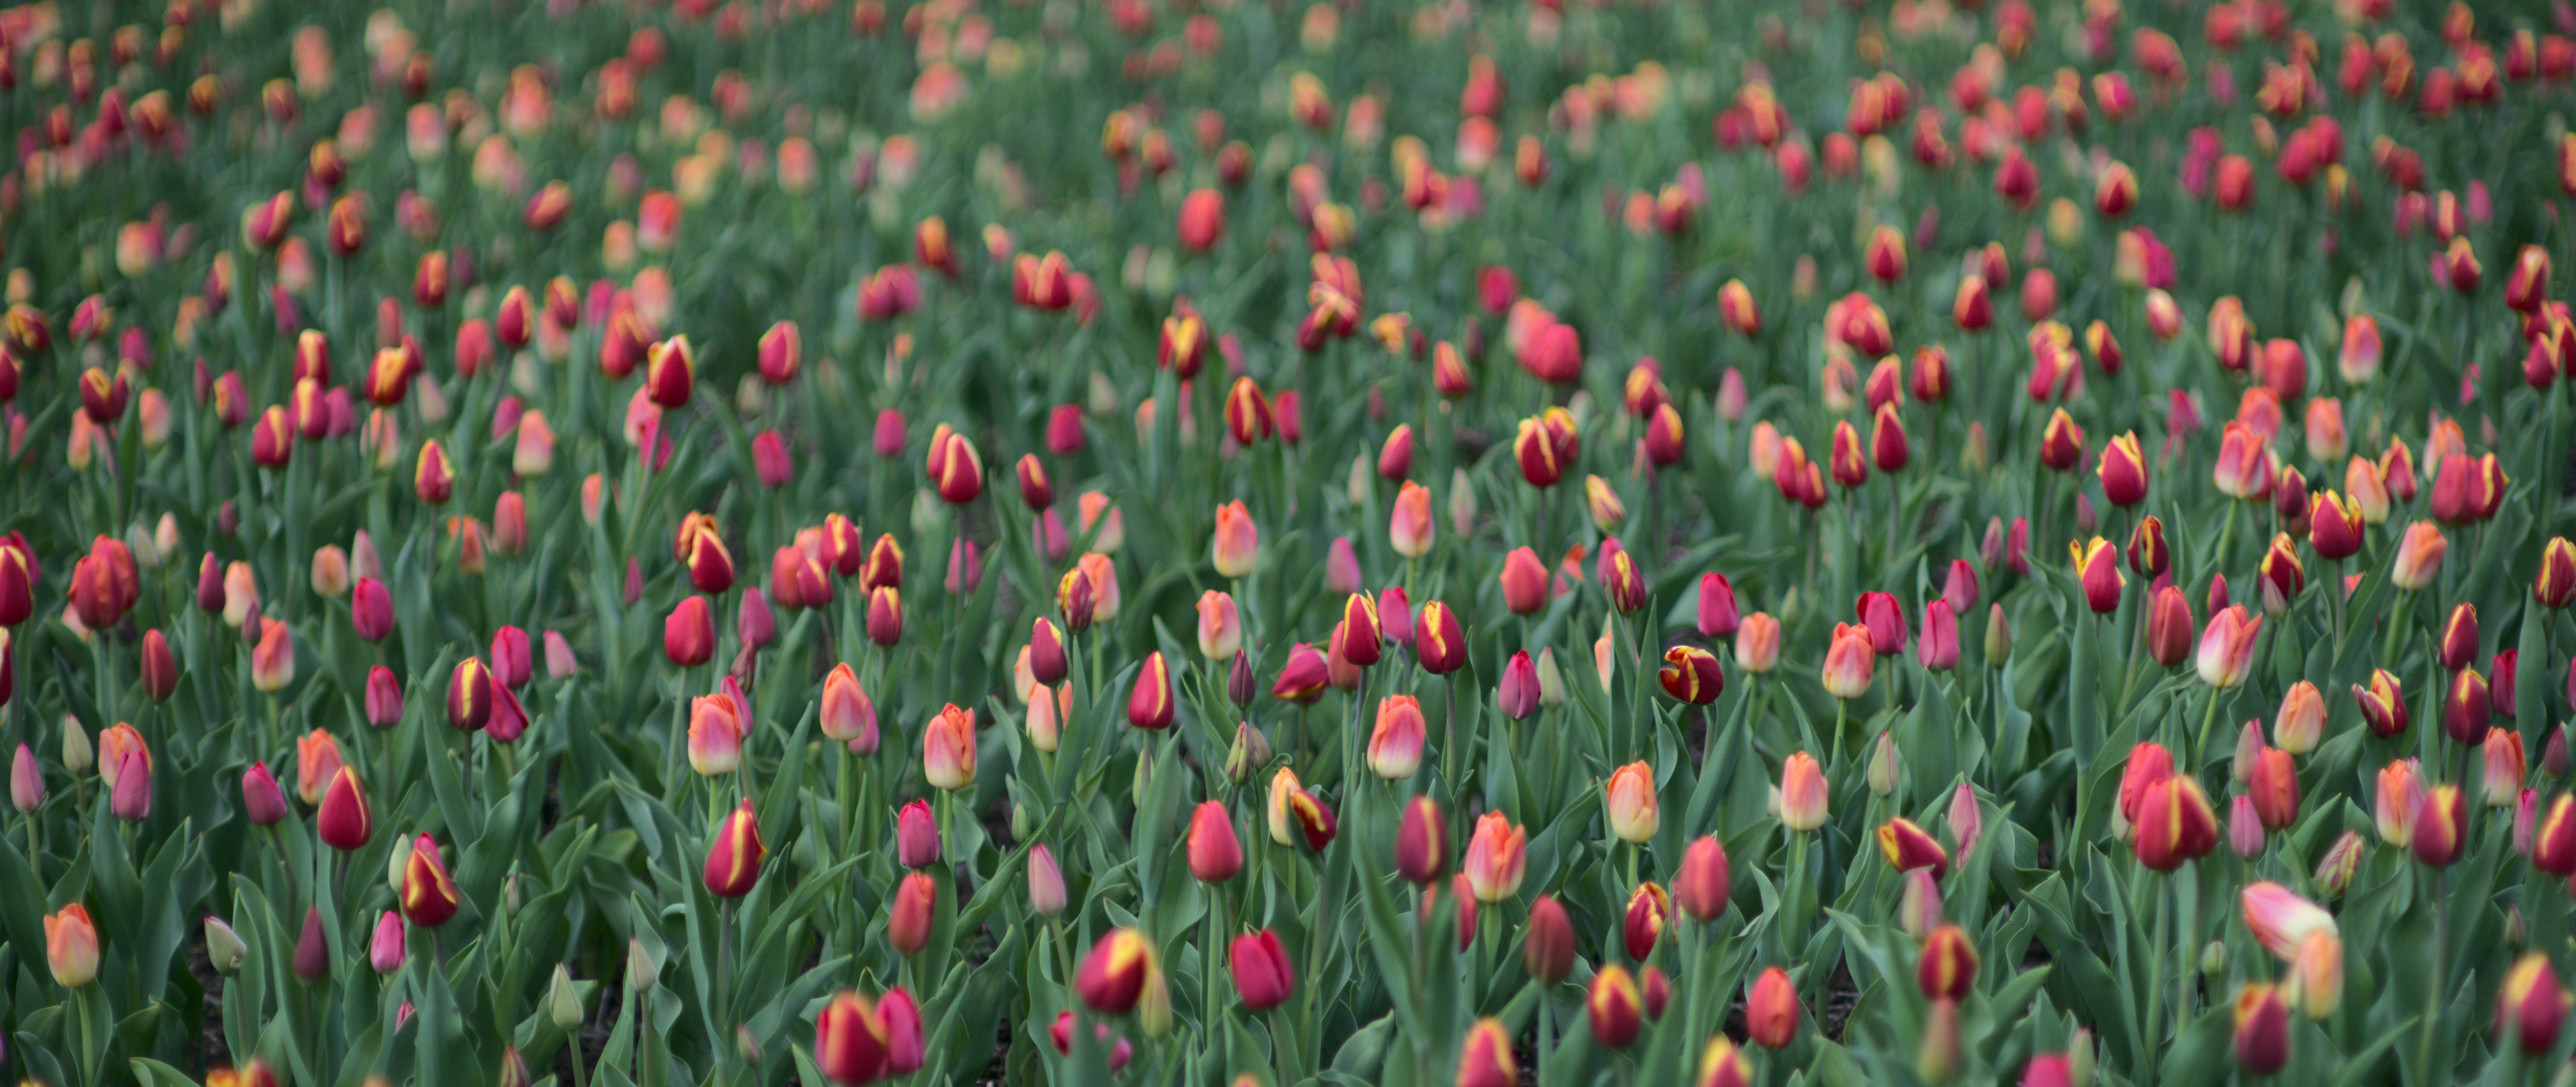 Garden of tulips
Jardin de tulipes